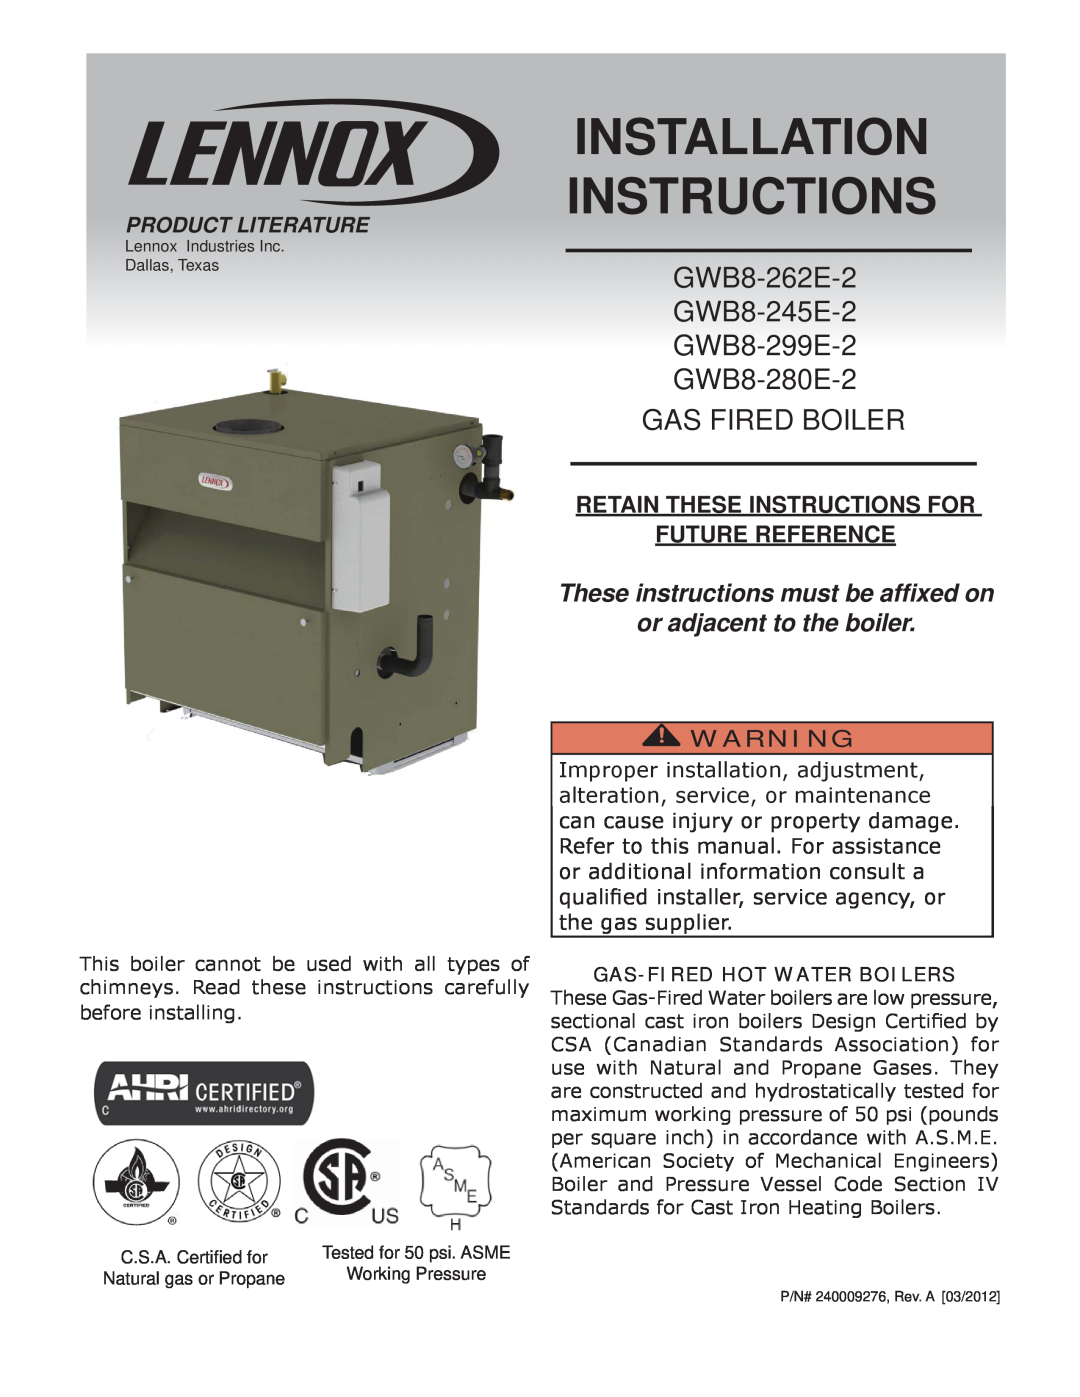 Lennox International Inc GWB8-280E-2, GWB8-262E-2 installation instructions Product Literature, before installing 